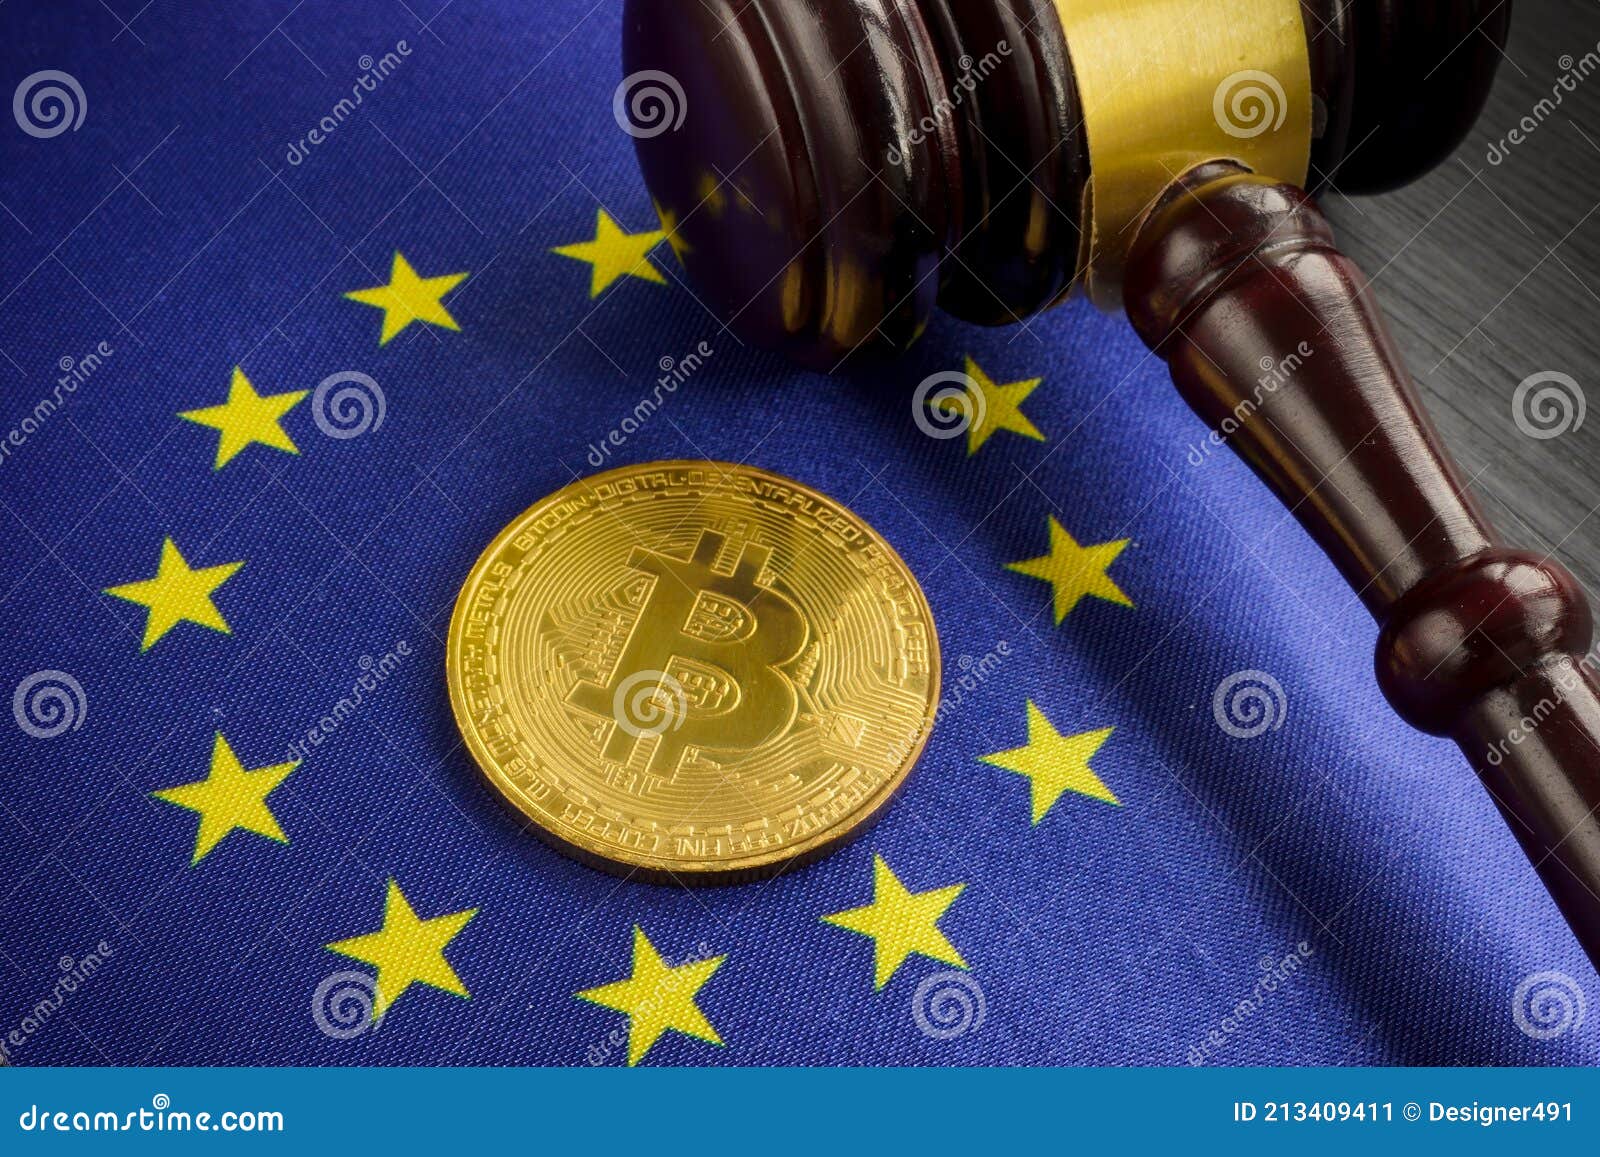 eu cryptocurrency regulation)